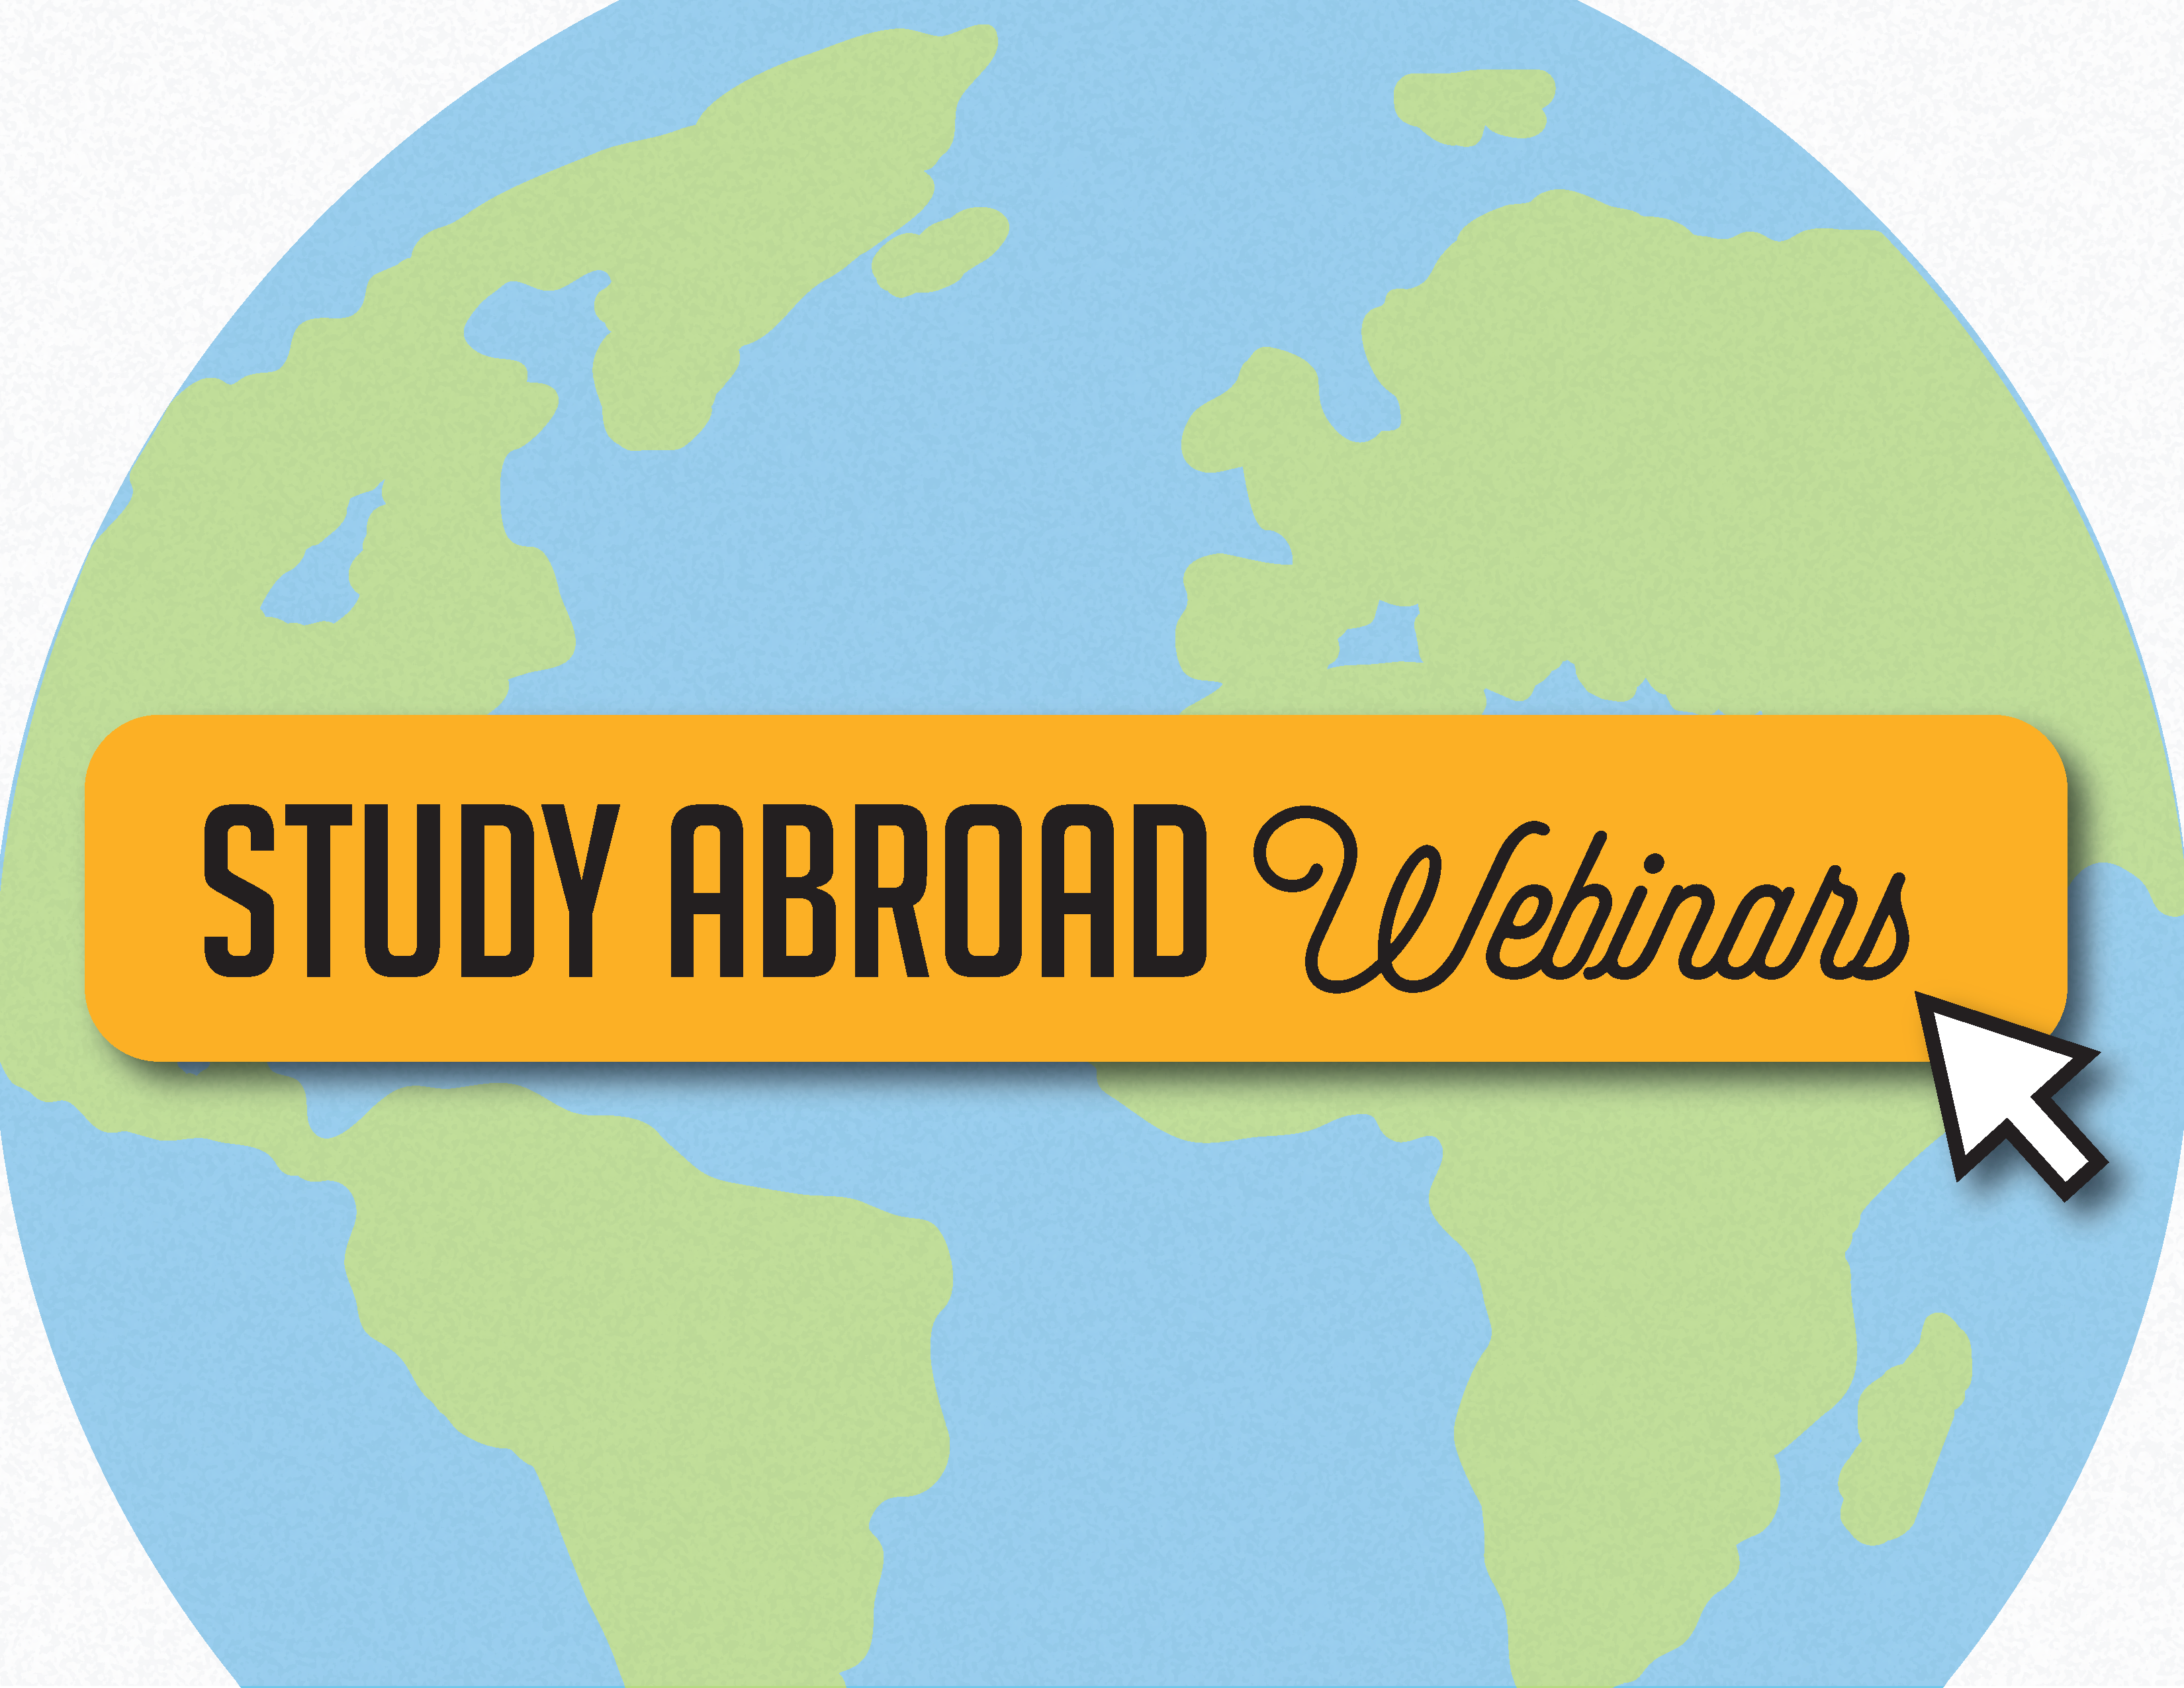 Study Abroad Webinars